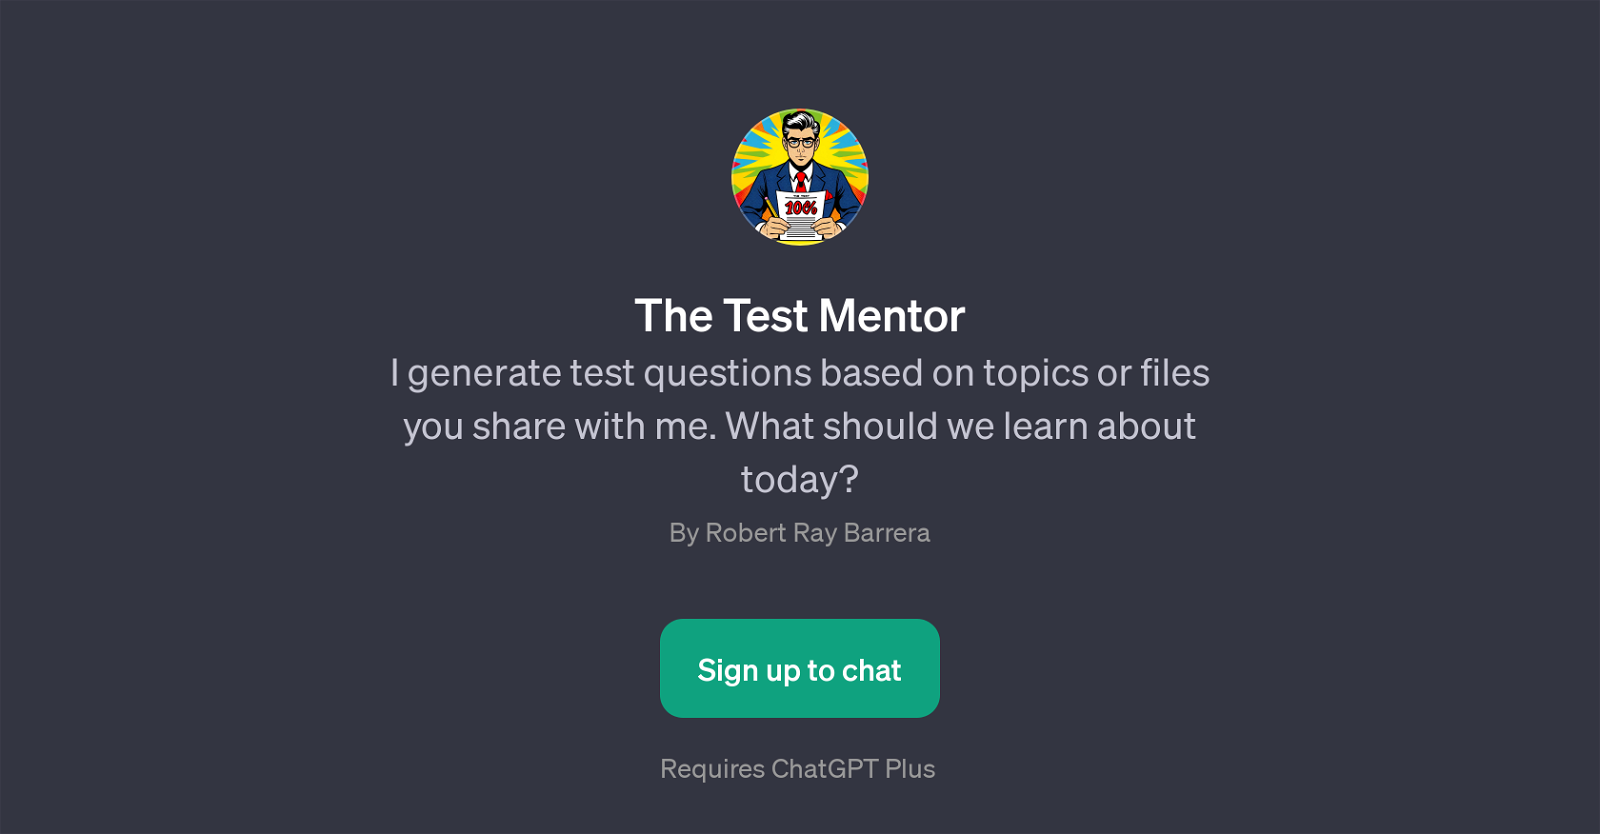 The Test Mentor website